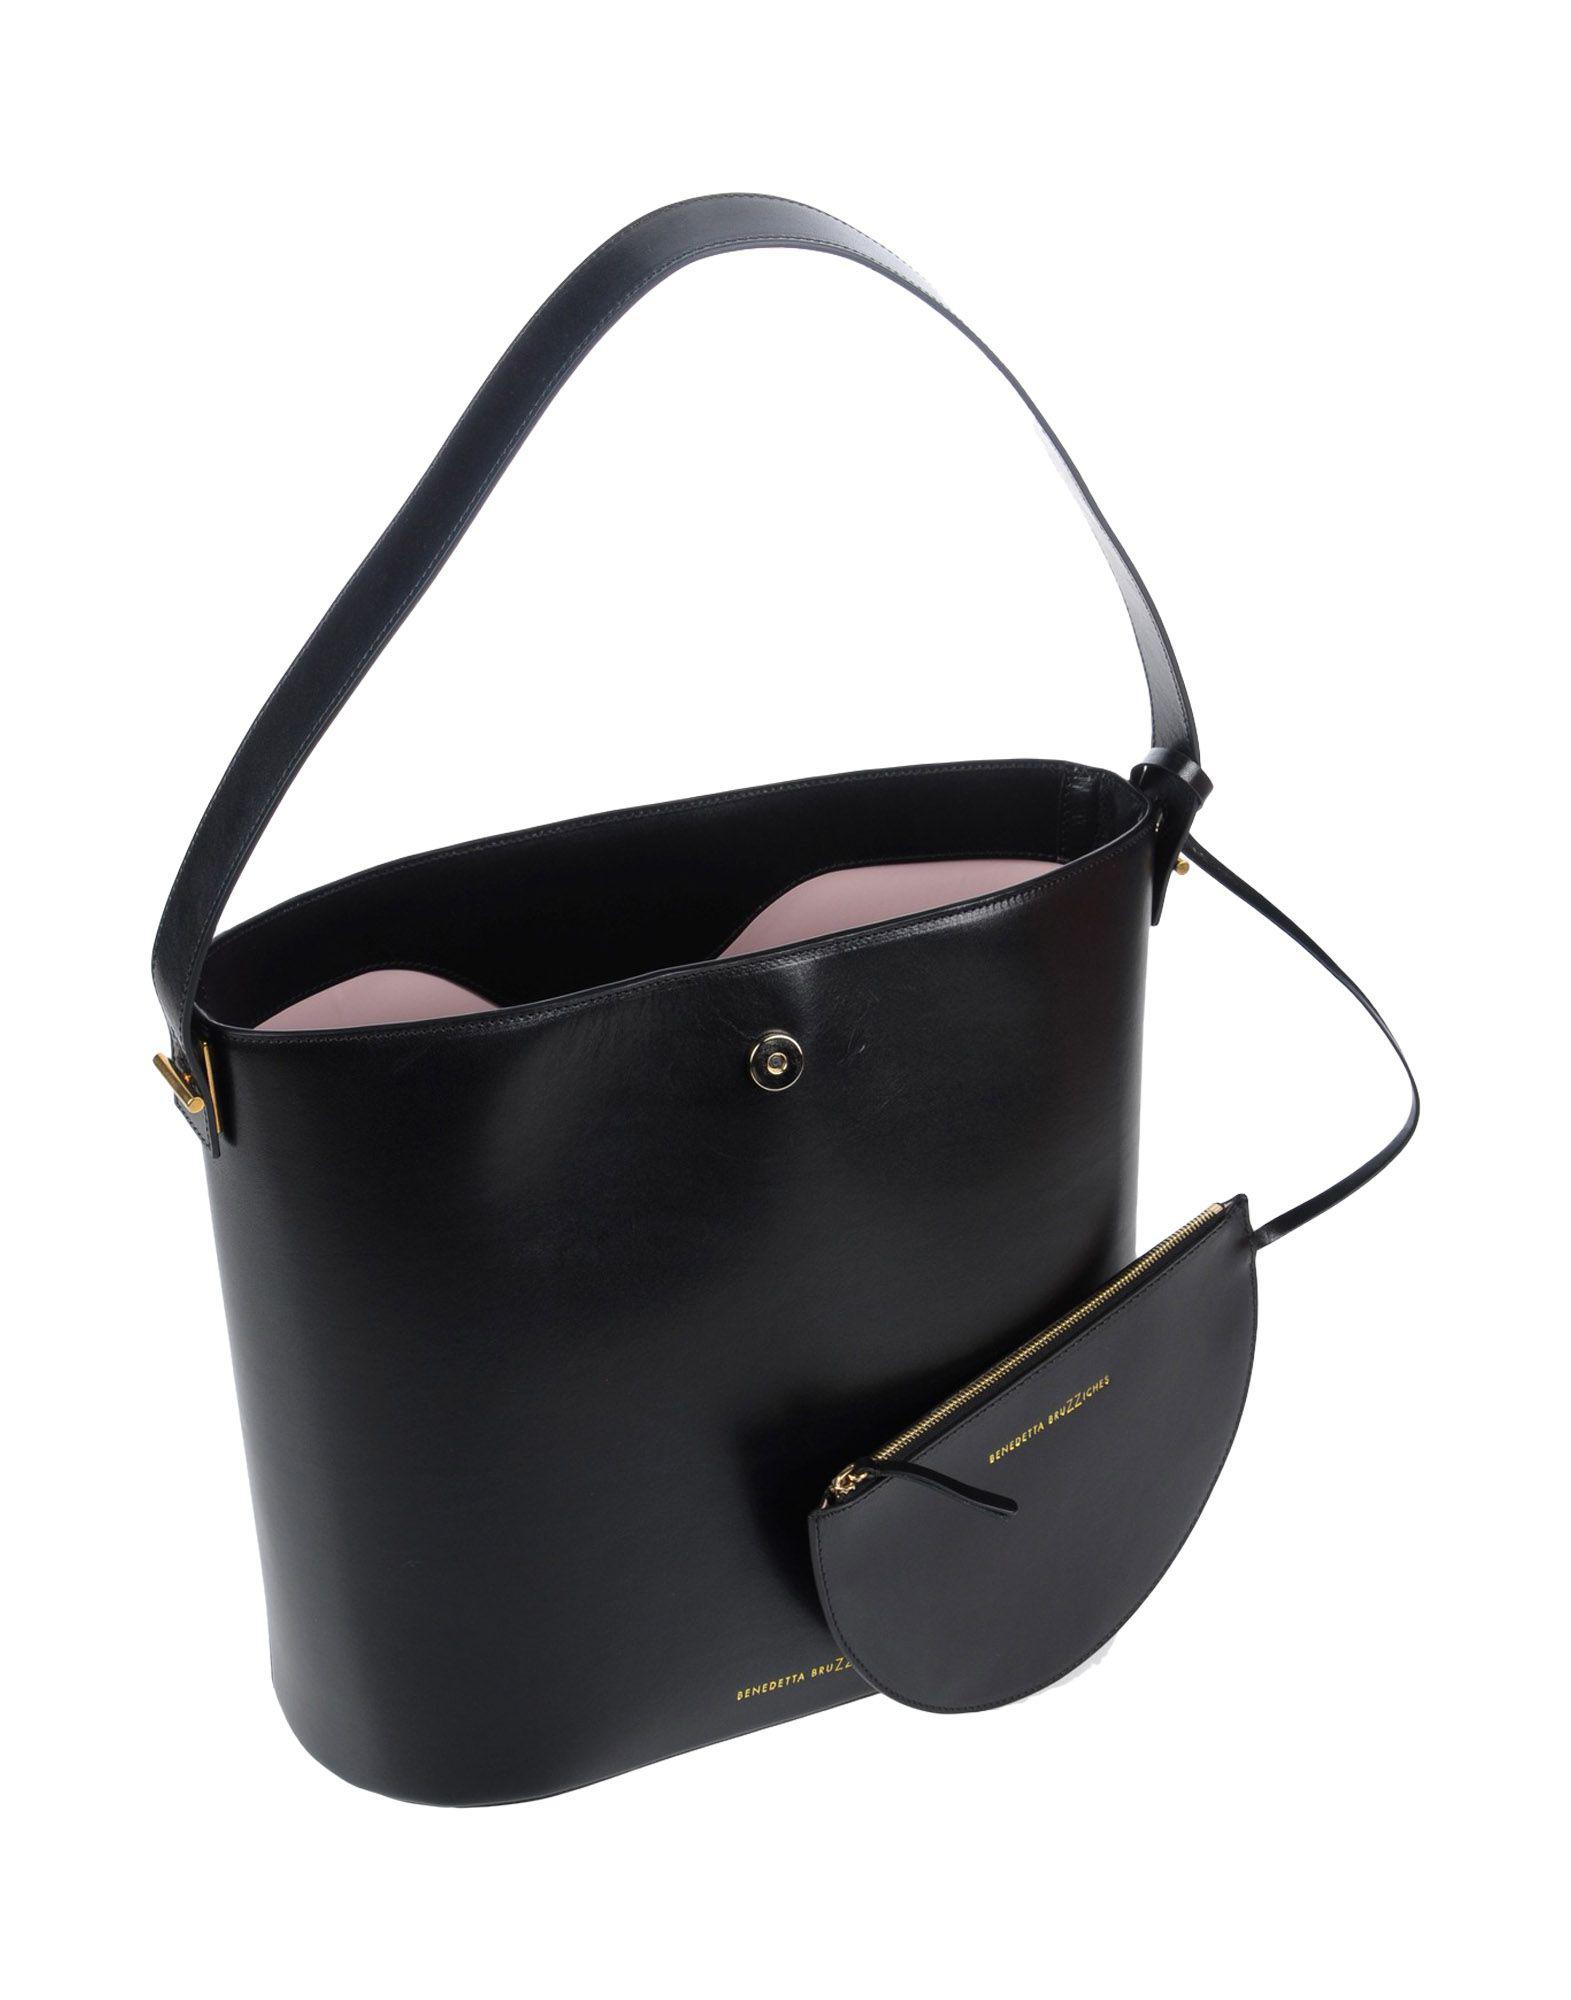 Benedetta Bruzziches Leather Handbags in Black - Lyst